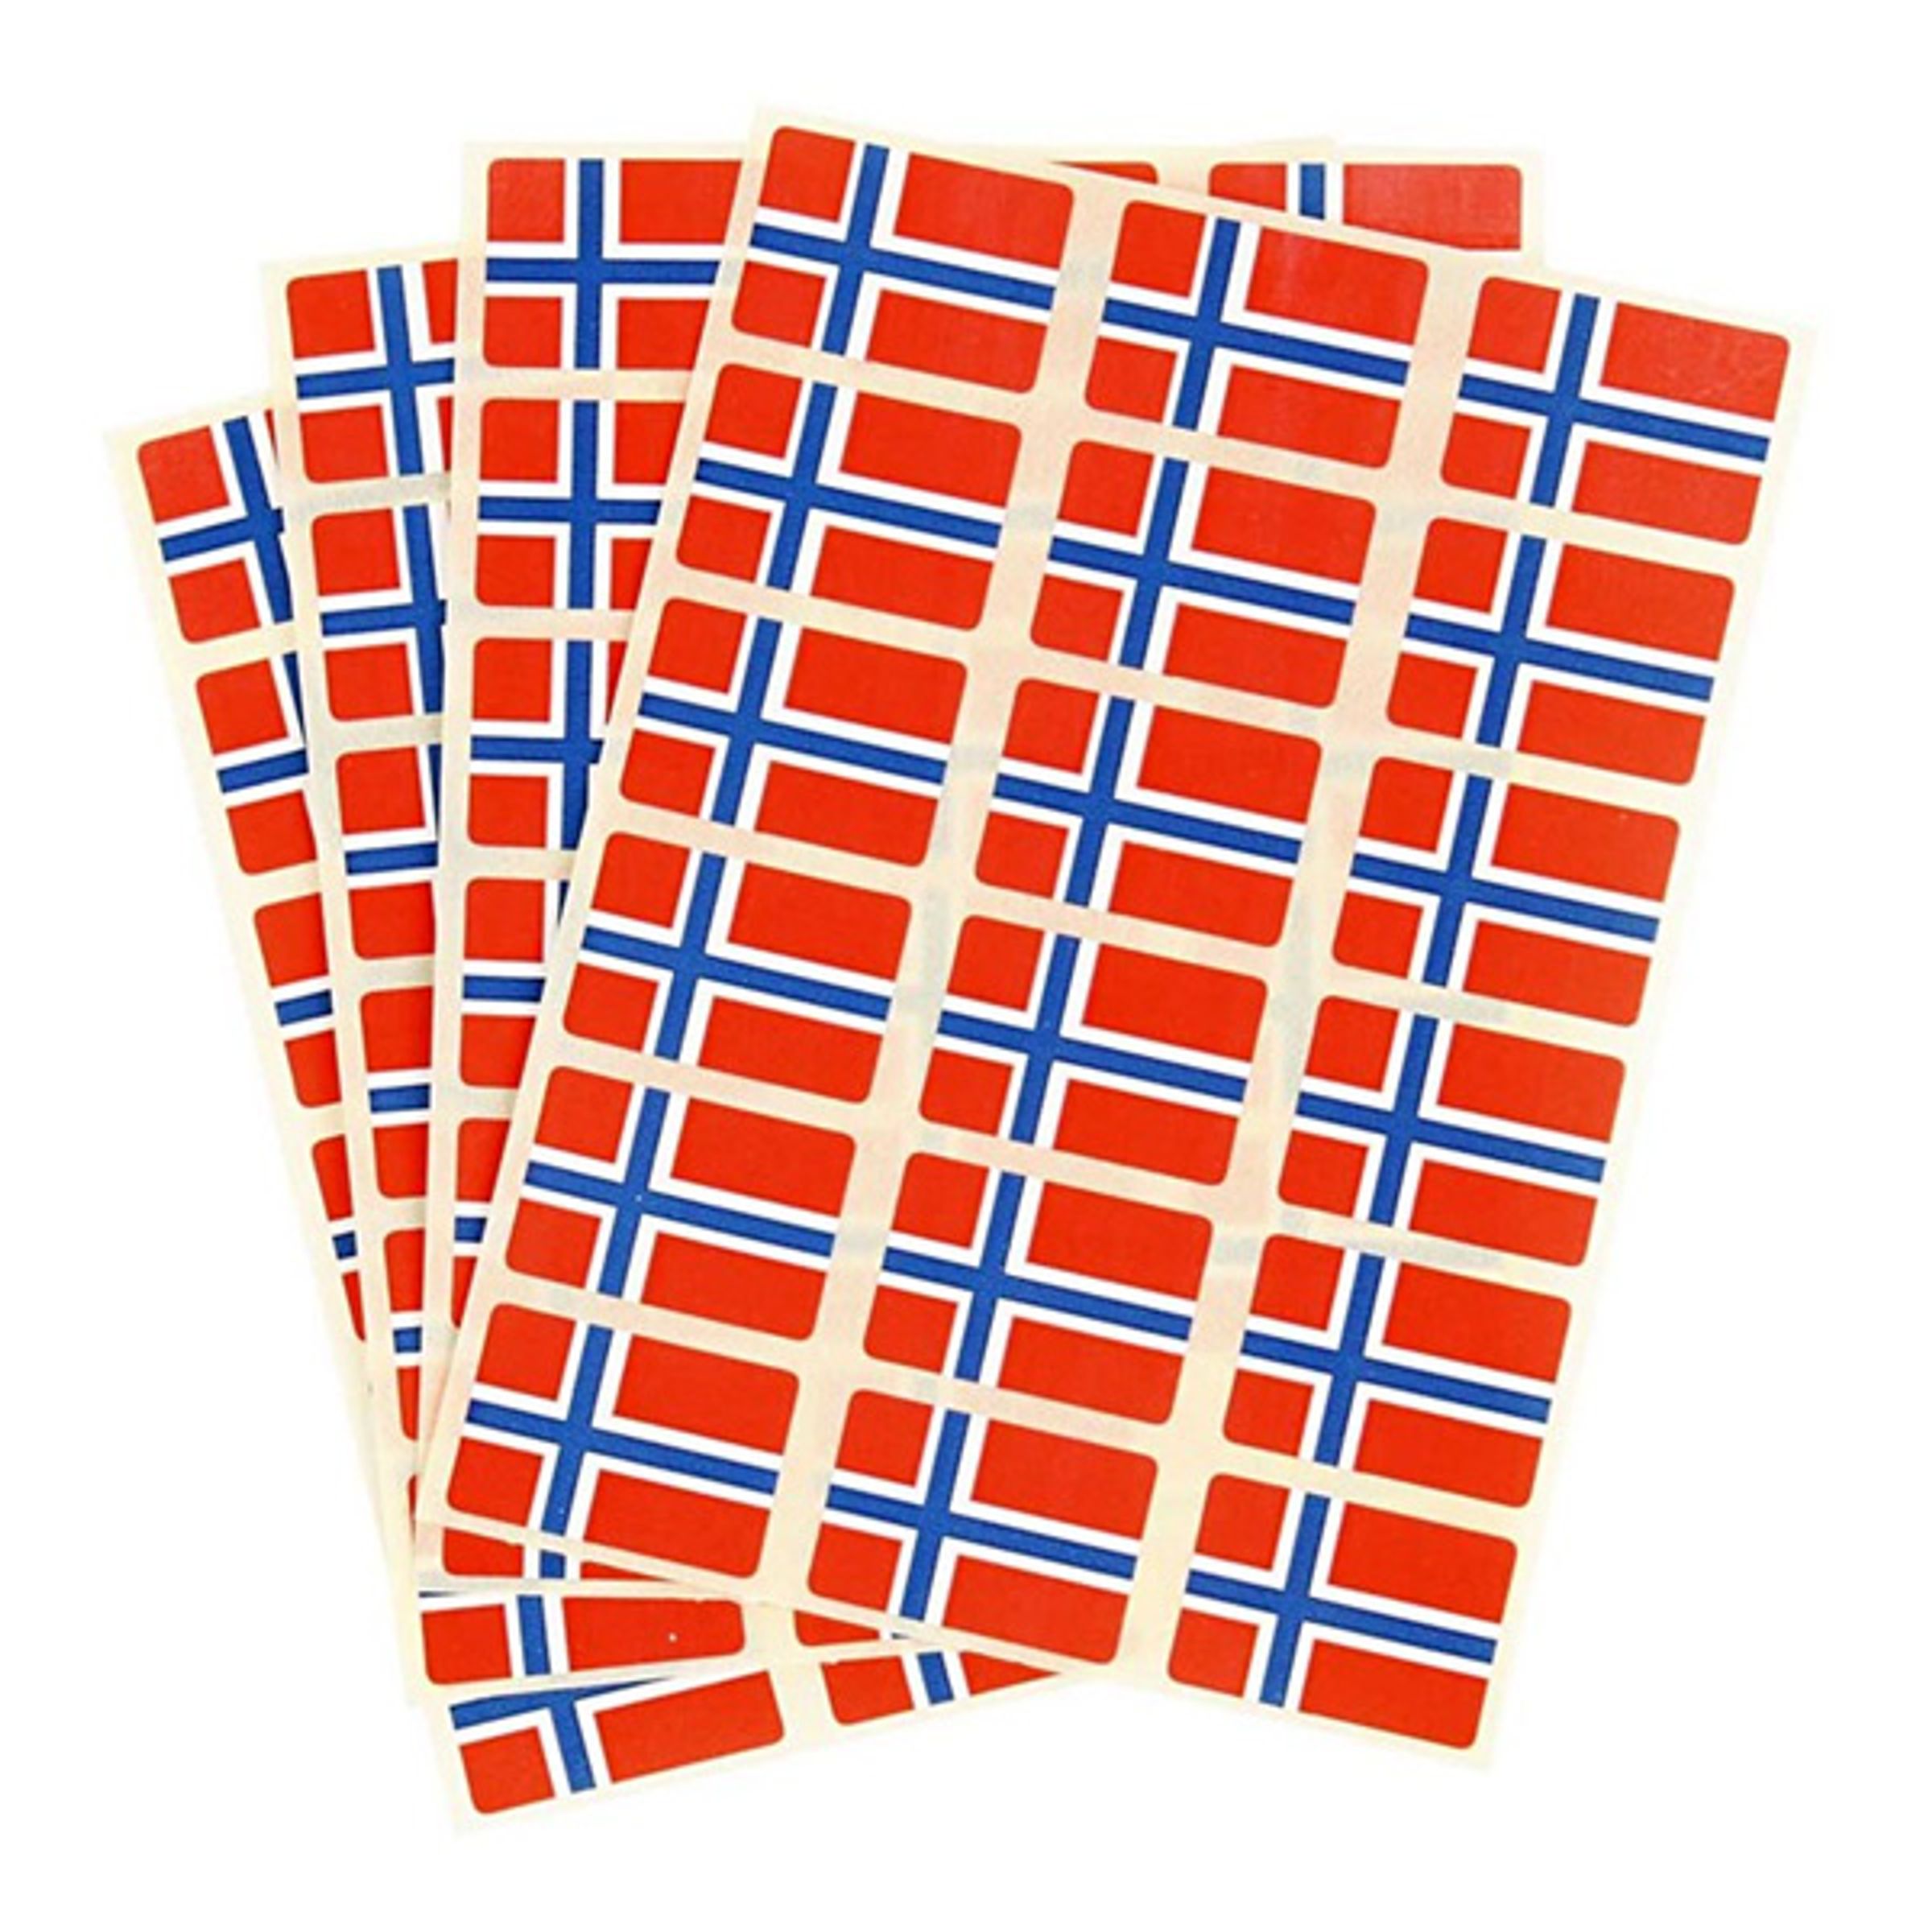 Stickersflaggor Norge - 72-pack